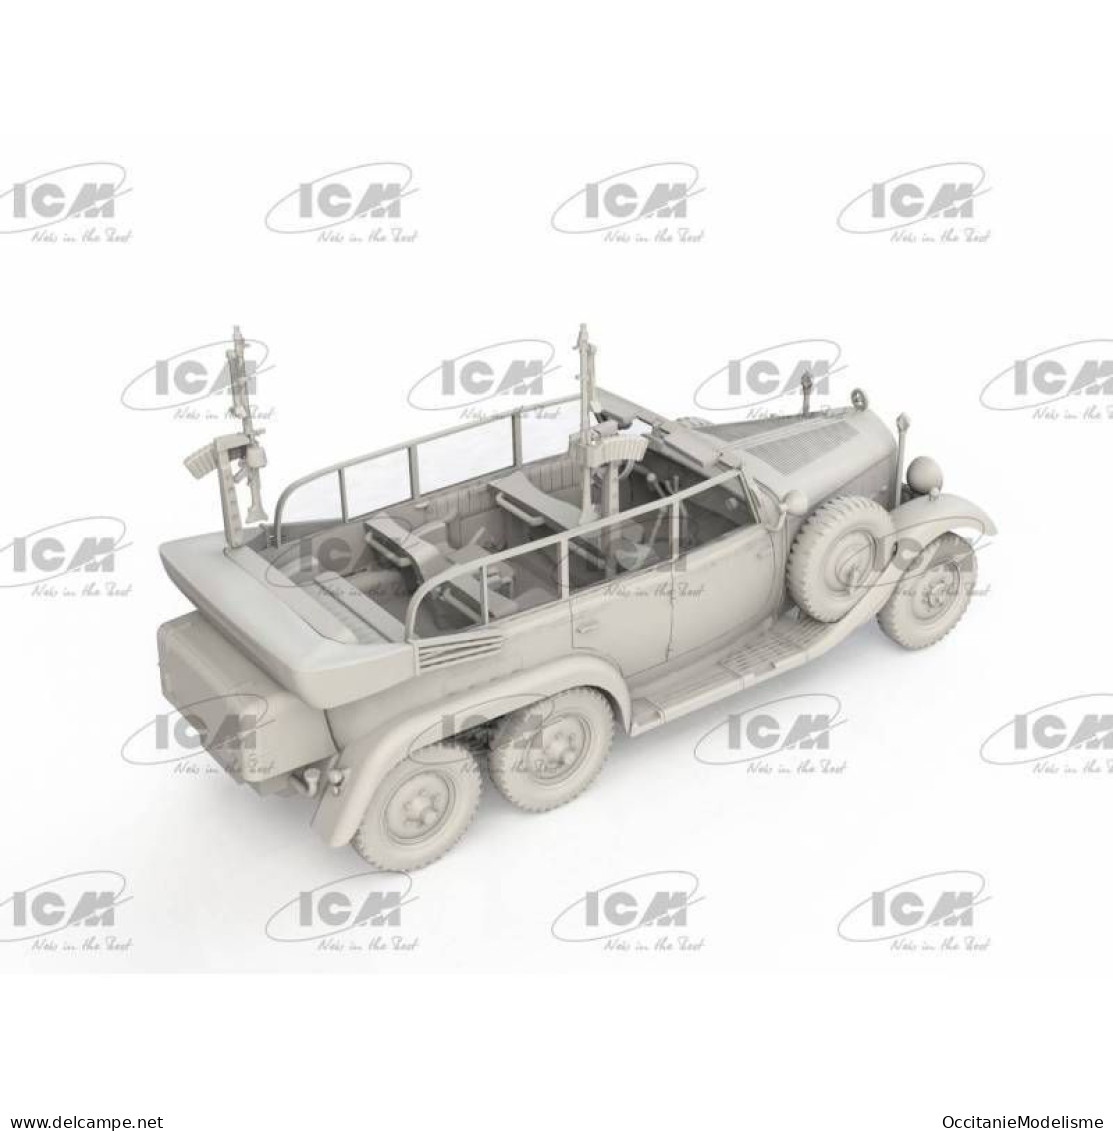 ICM - MERCEDES-BENZ TYPE G4 Partisanenwagen MG34 WWII Maquette Kit Plastique Réf. 72473 Neuf NBO 1/72 - Militaire Voertuigen